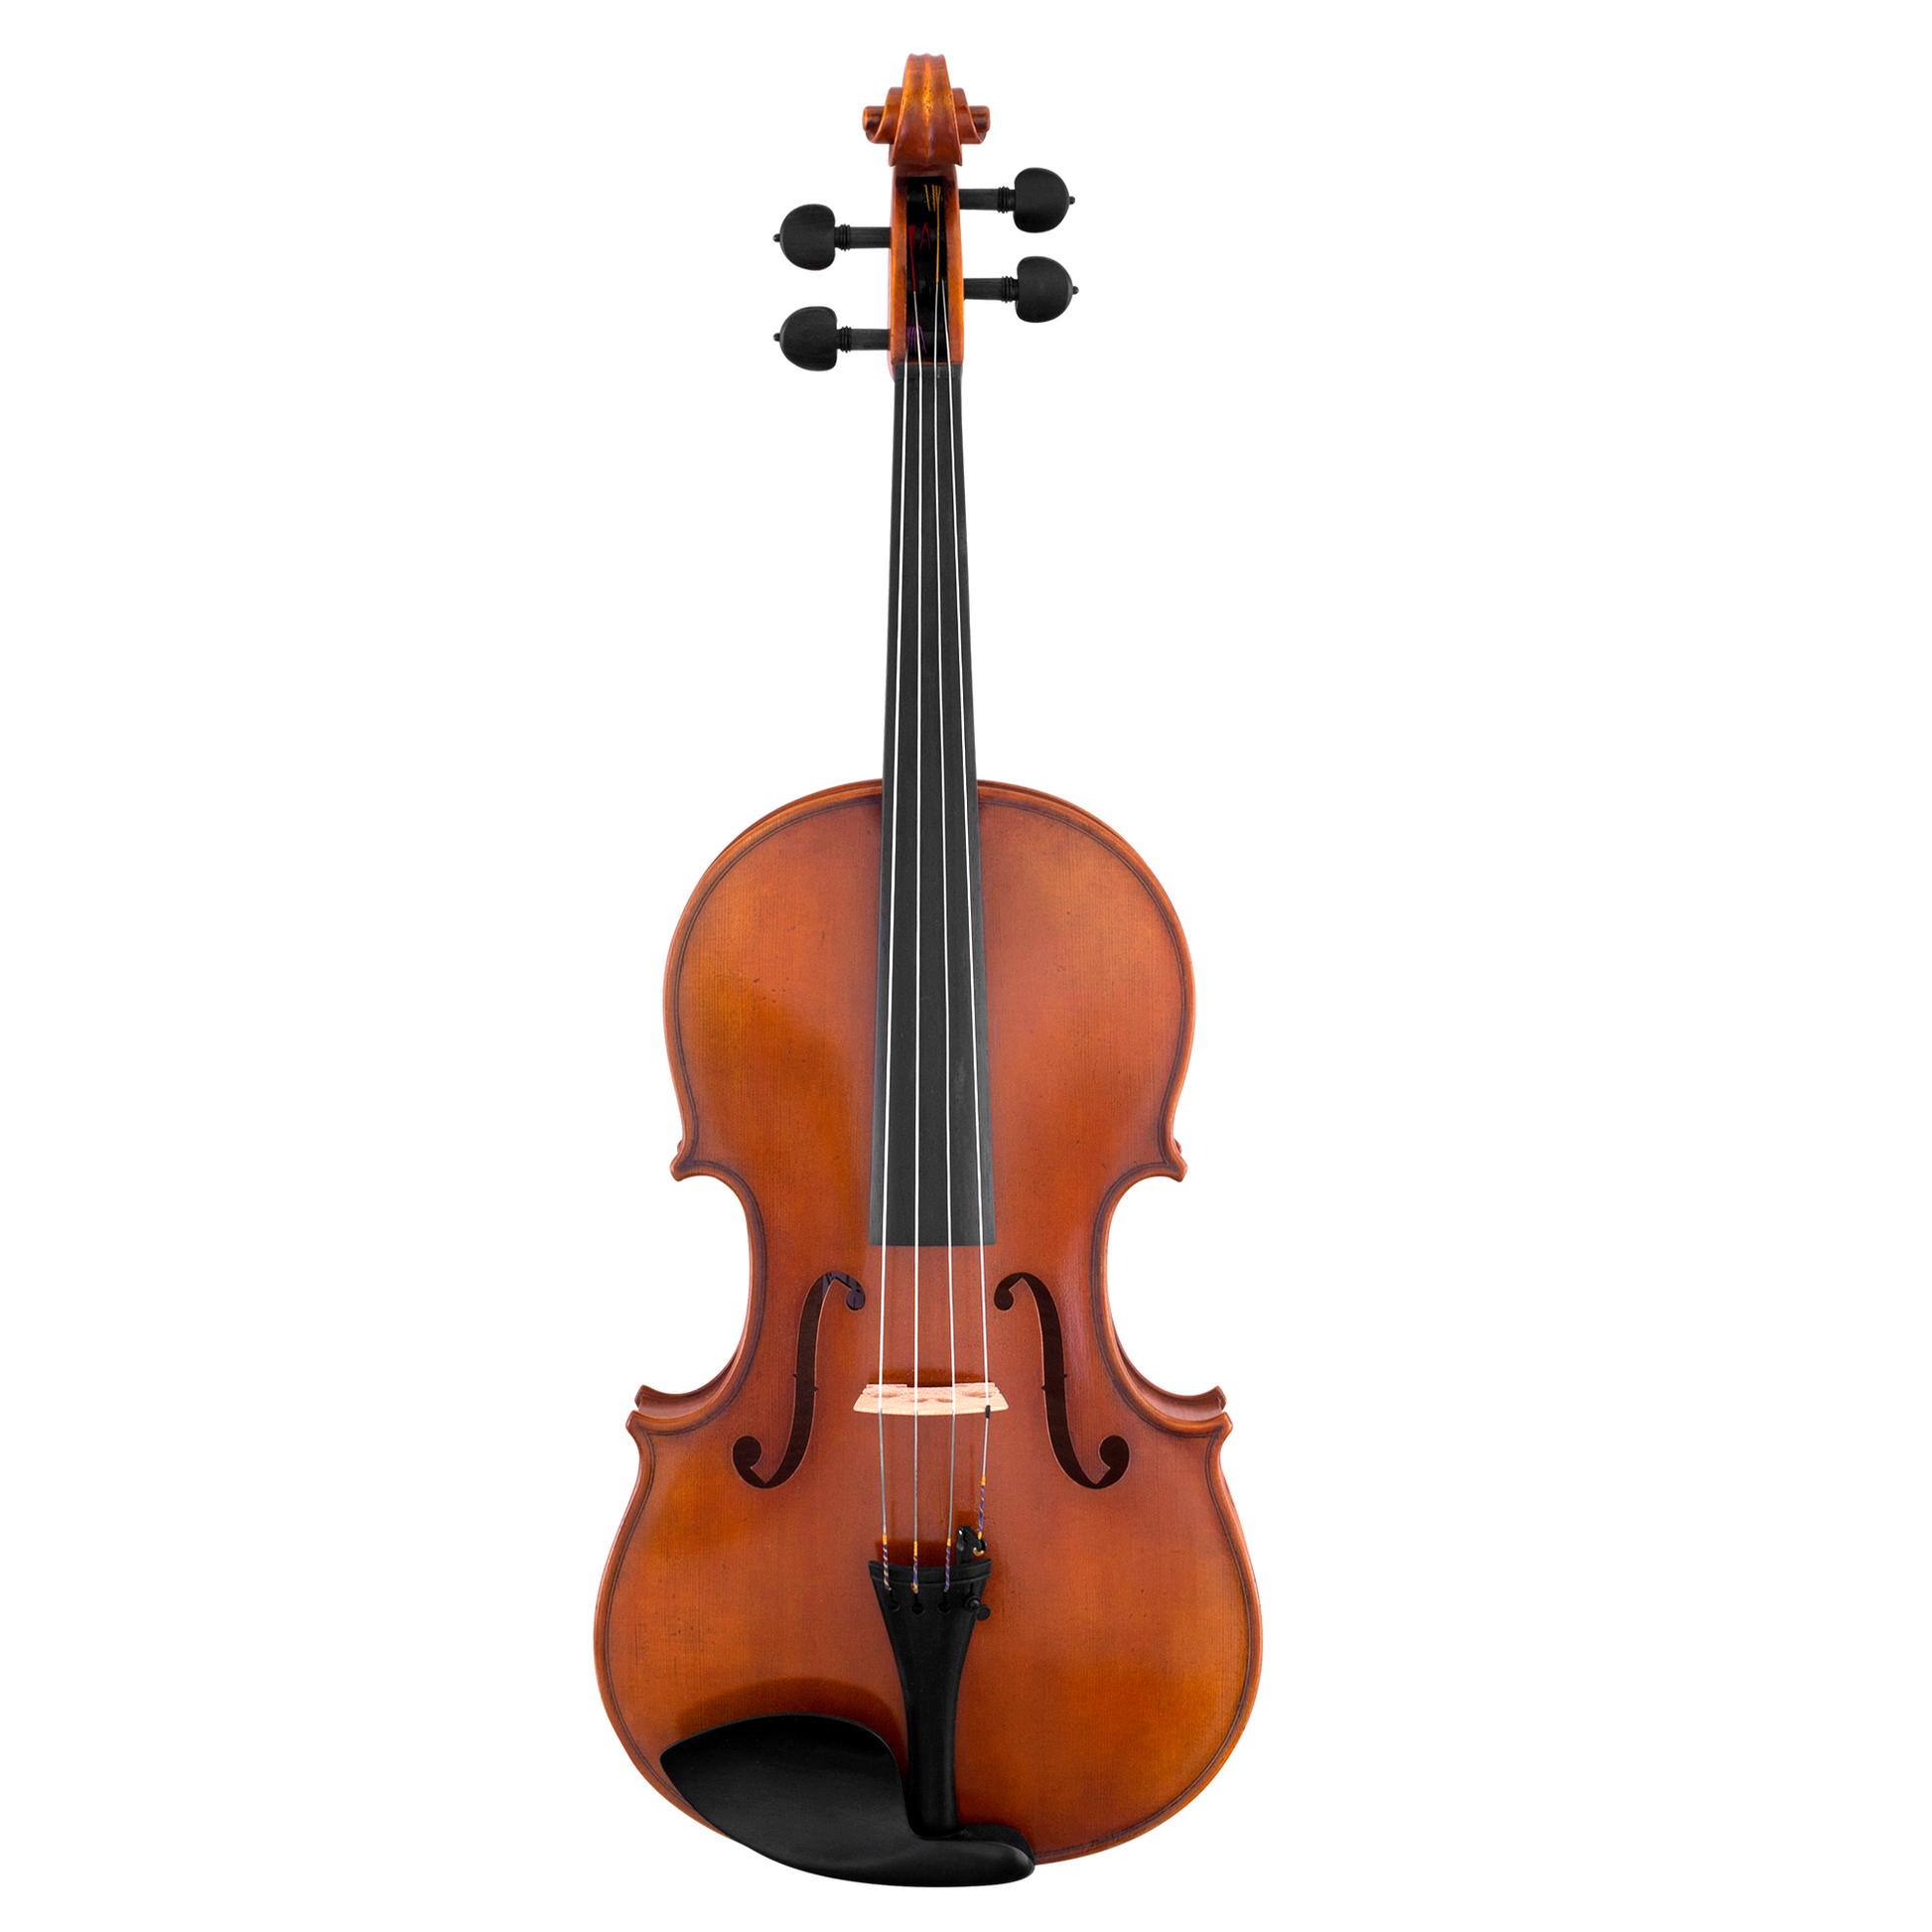 Online ordering Viola Rental - Premium Viola from Poppas music - Just $25! Shop now at Poppa's Music